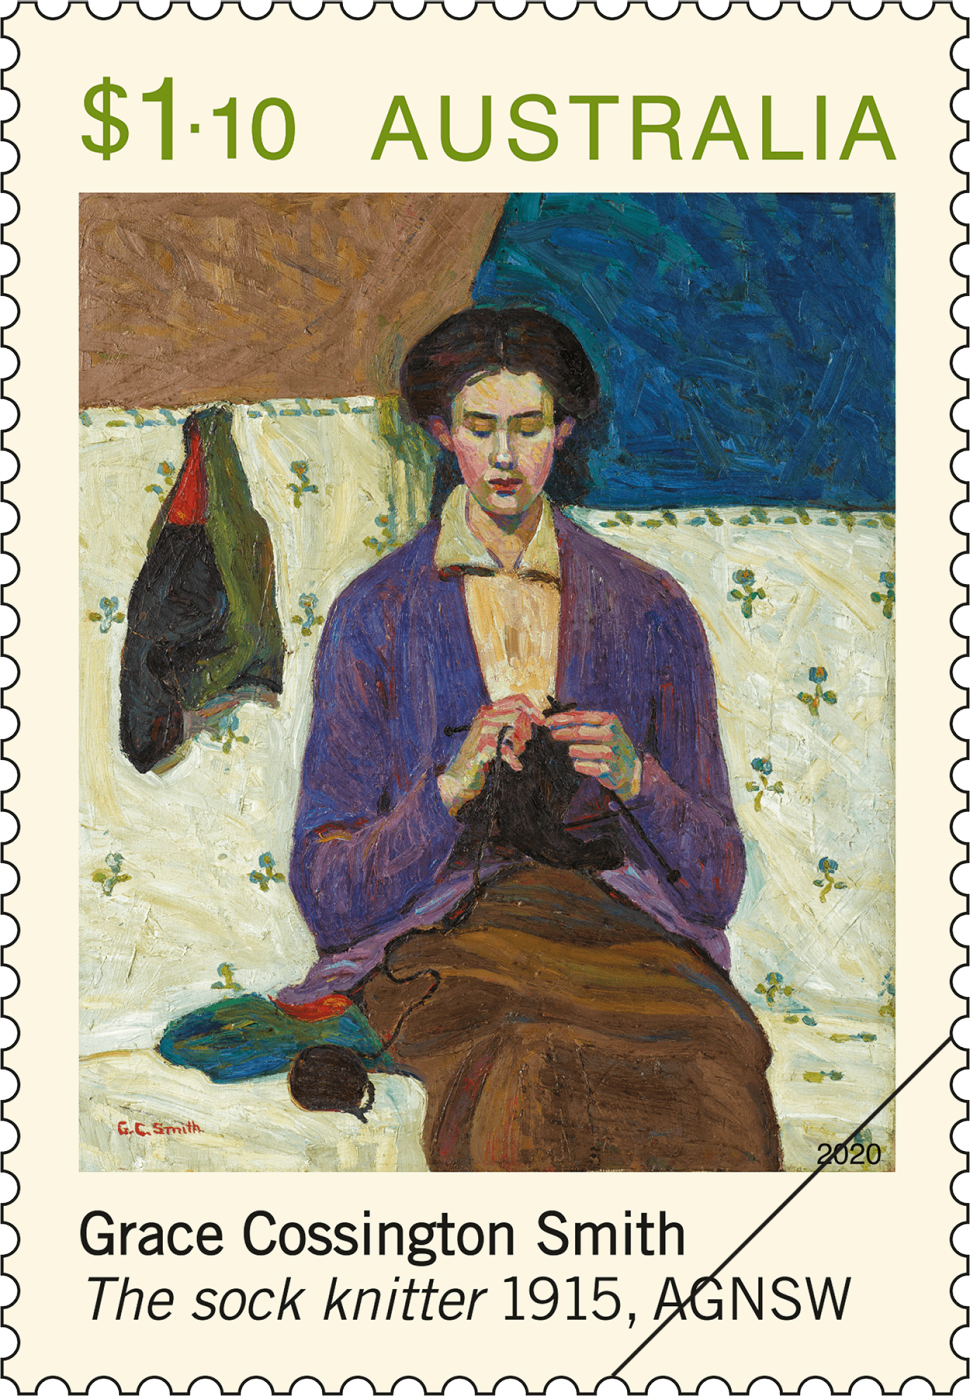 $1.10 Grace Cossington Smith, The sock knitter 1915